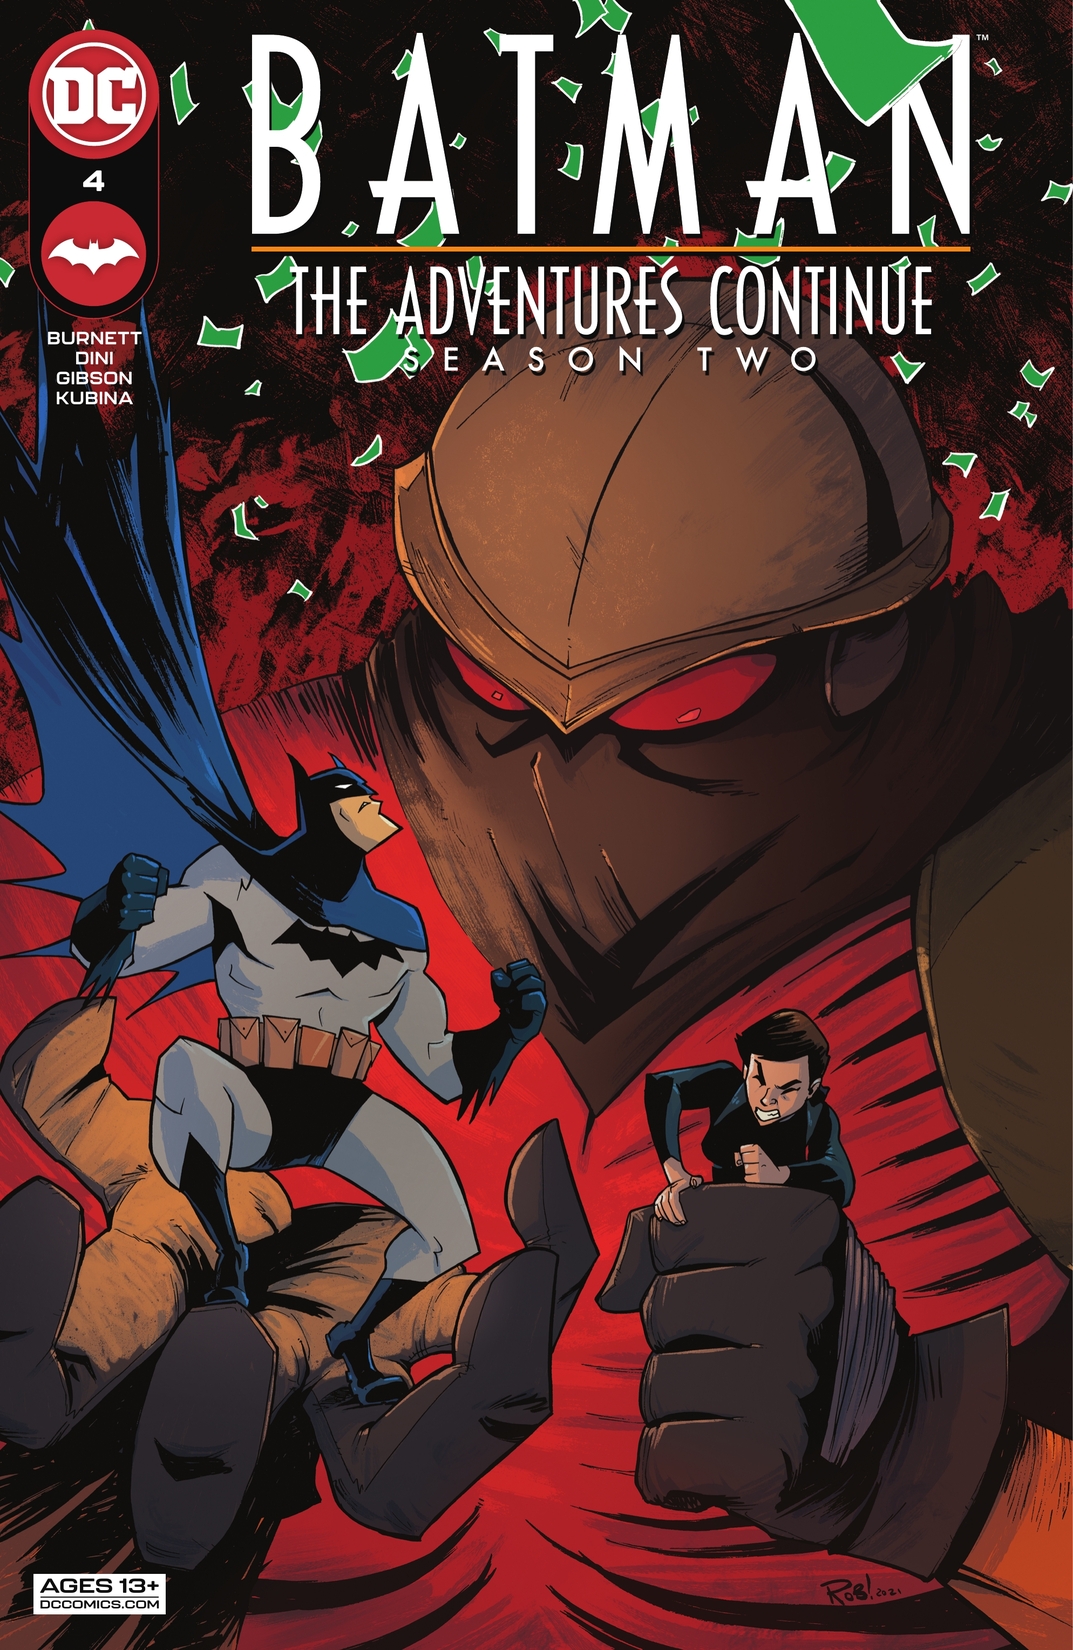 Batman: The Adventures Continue Season Two #4 preview images